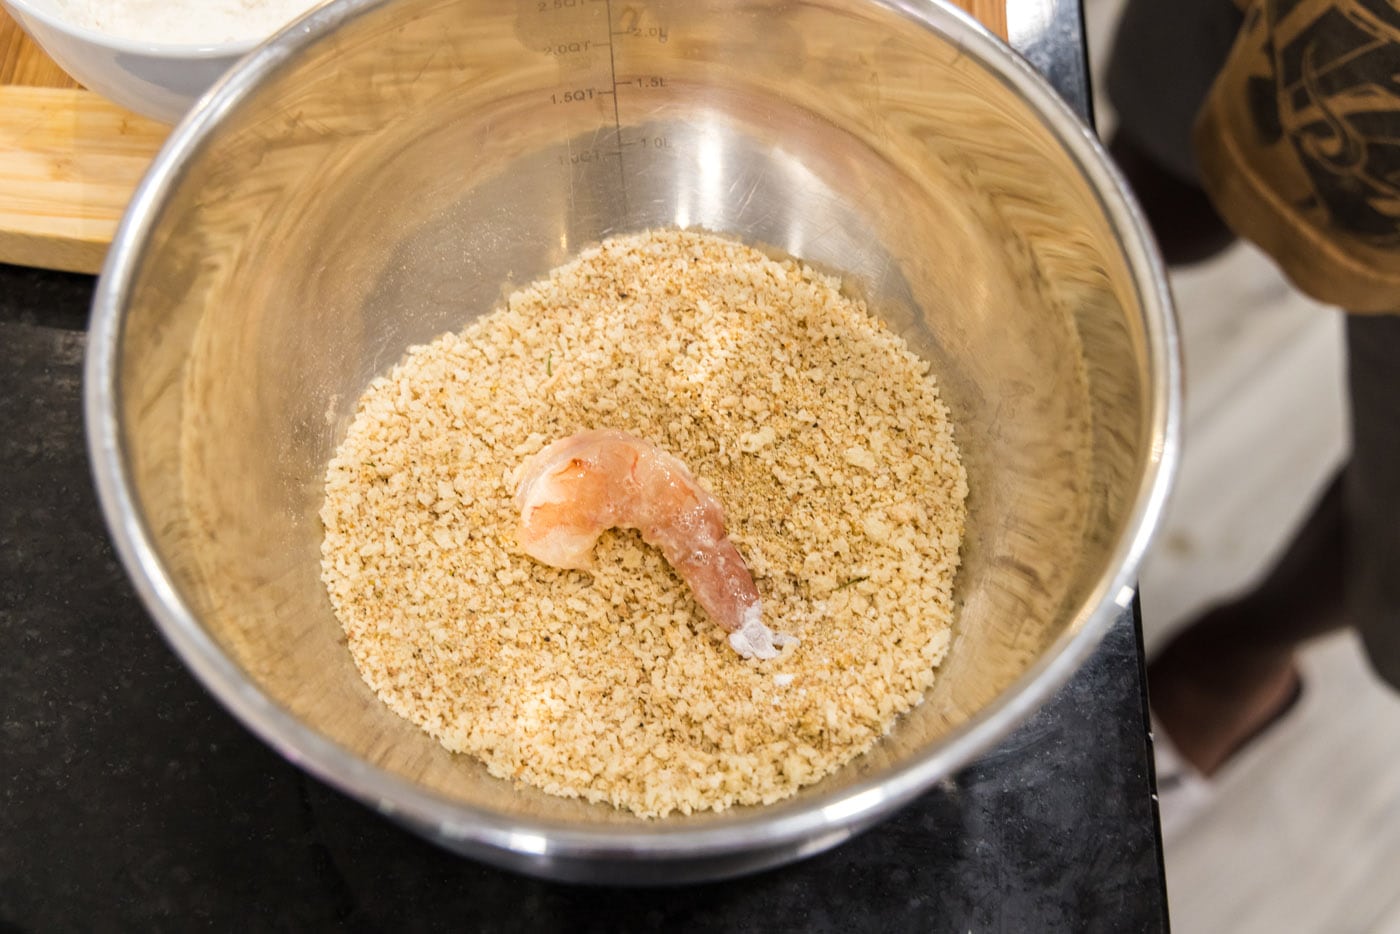 coating dredged shrimp in bread crumb mixture